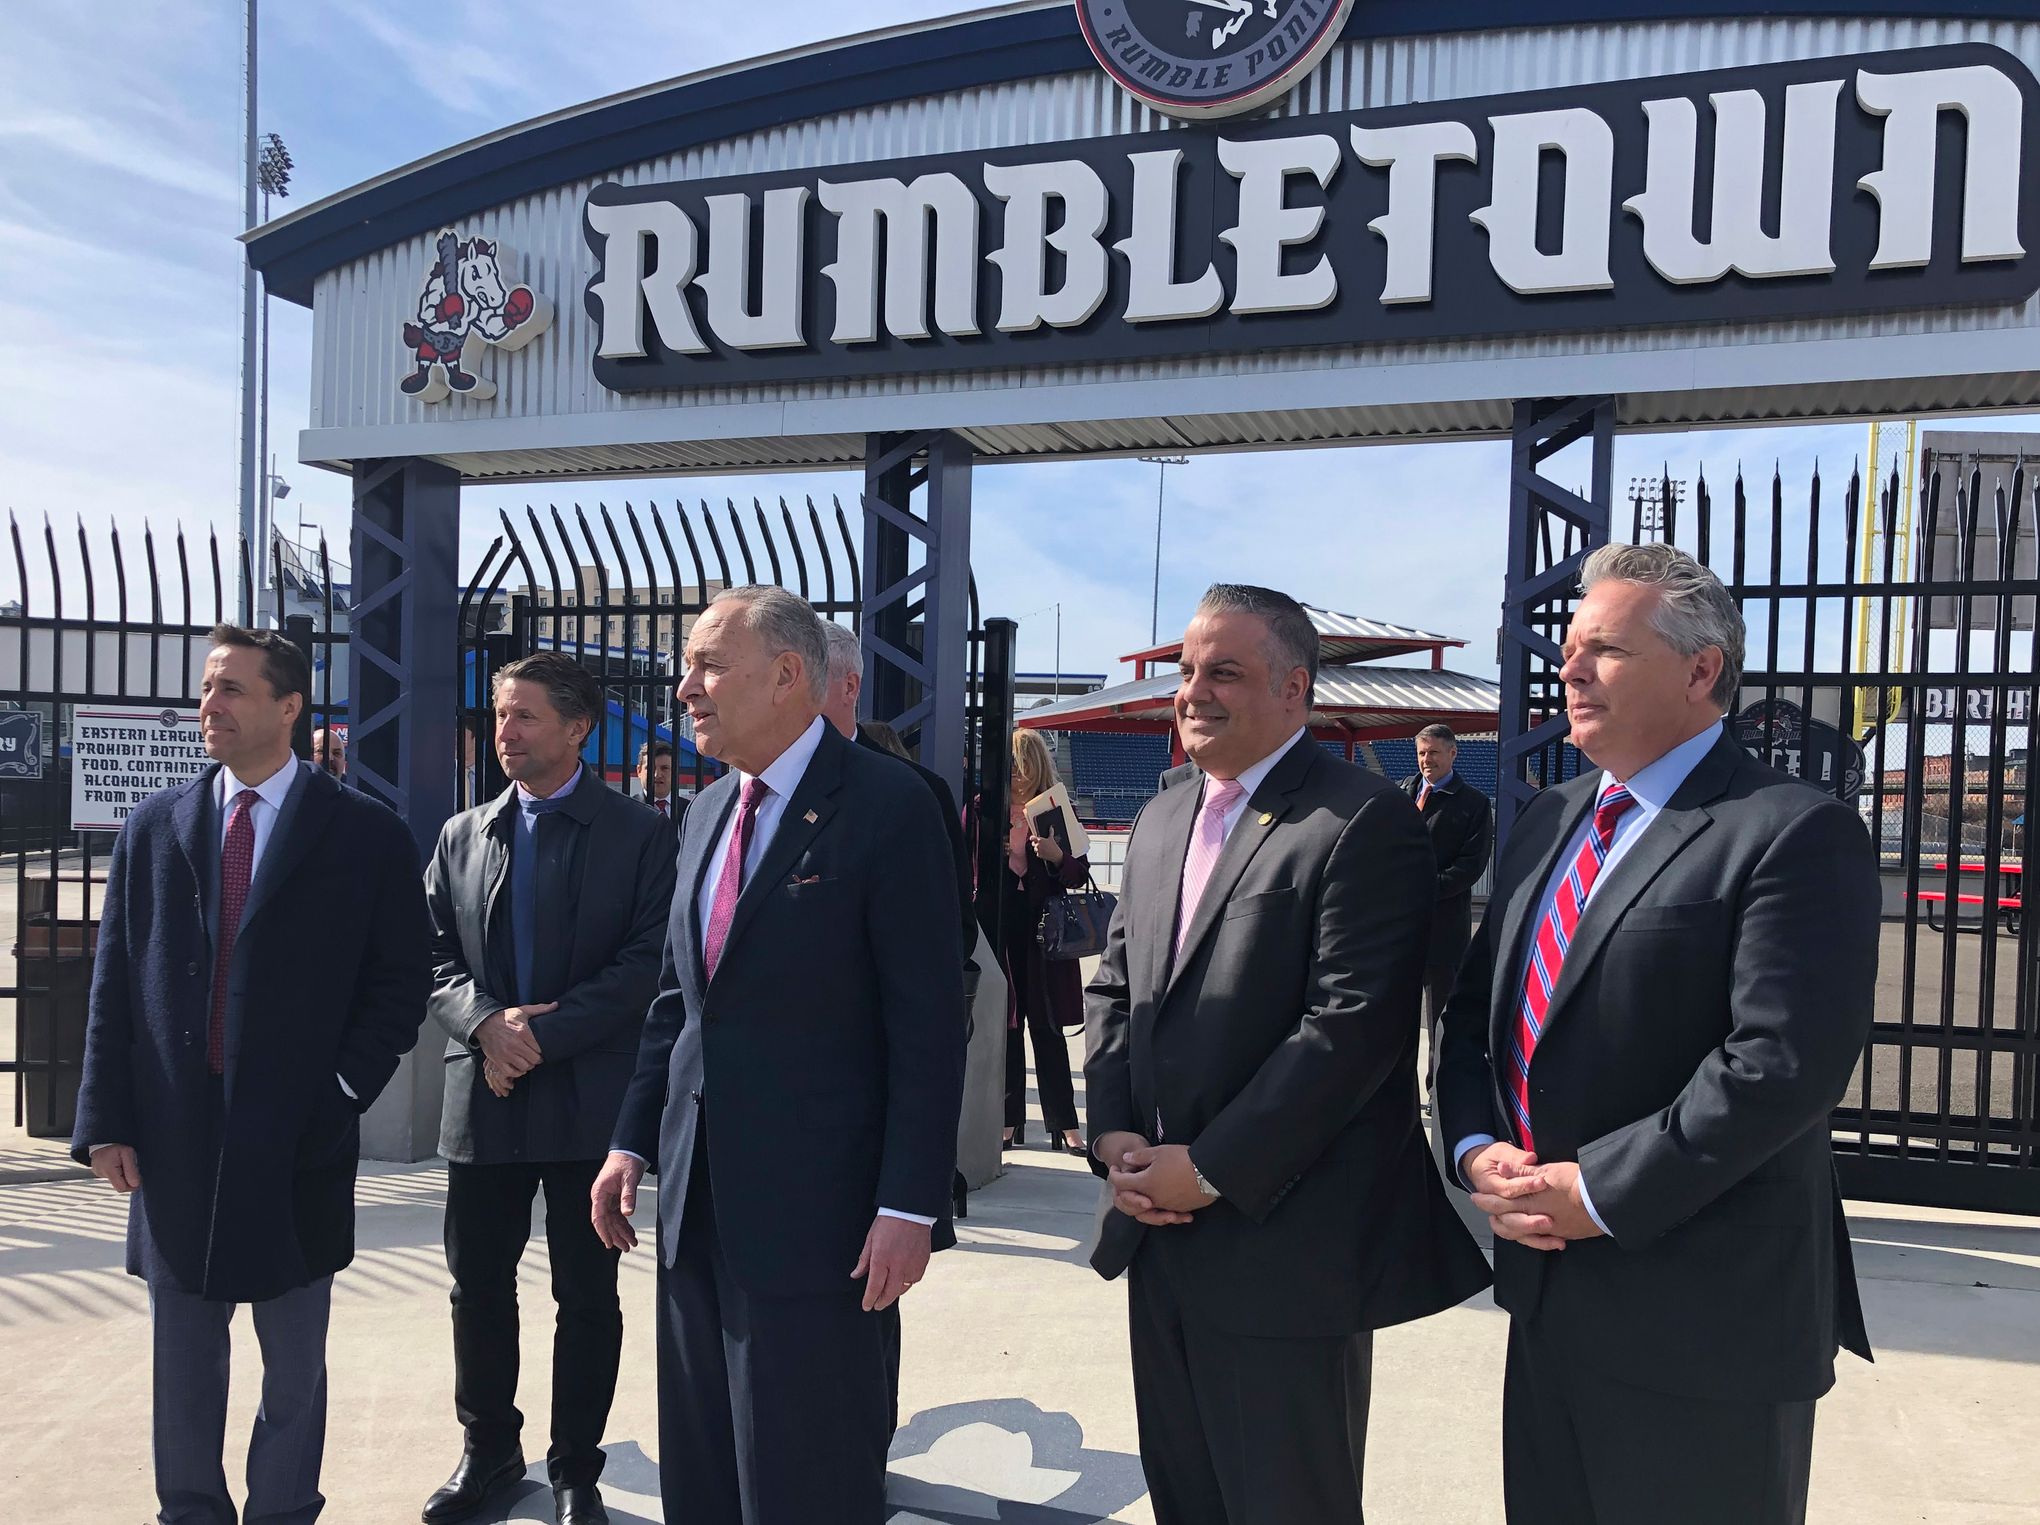  Mets:Binghamton Rumble Ponies Stadium Upgrades